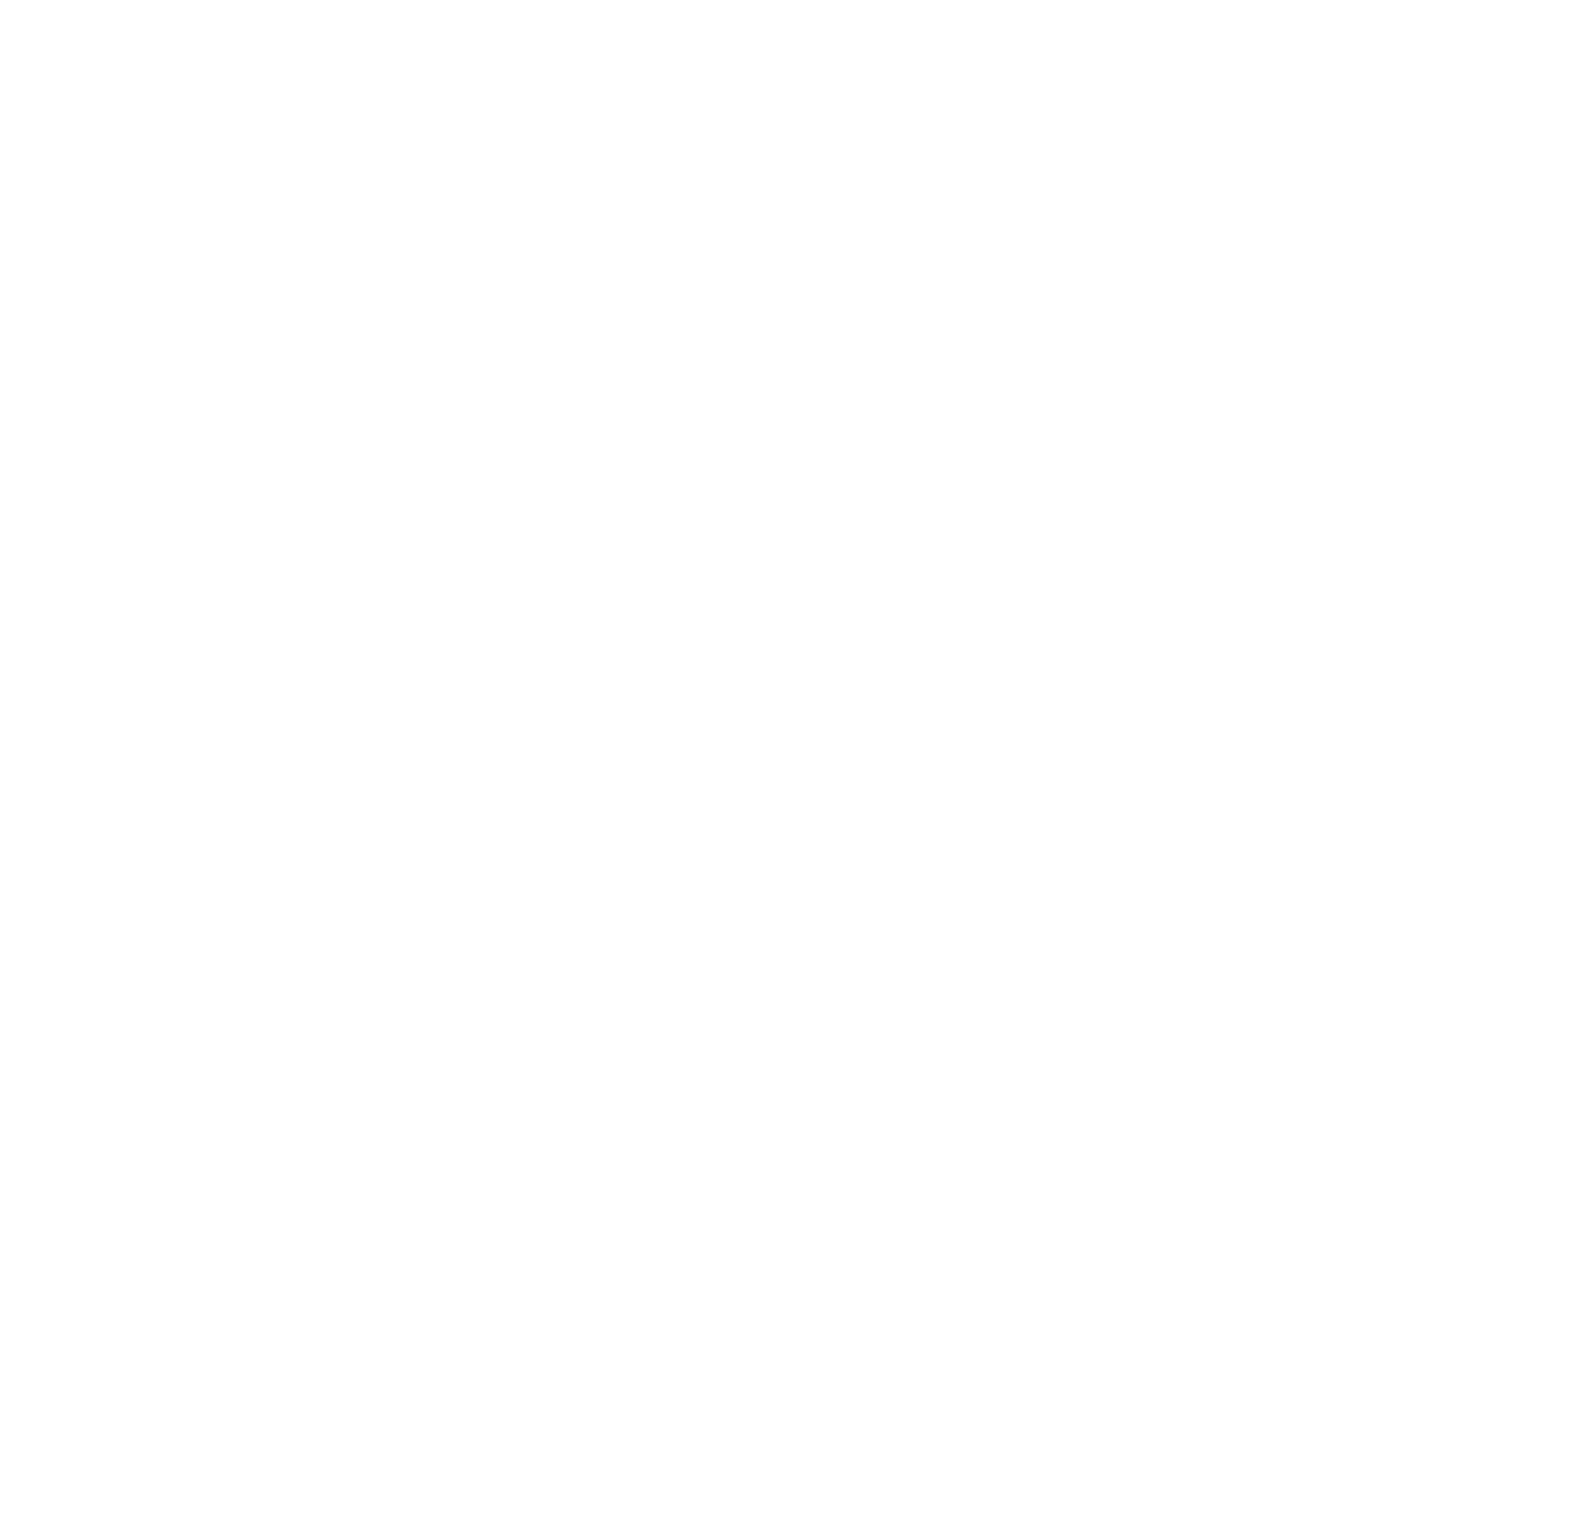 UroGen Pharma logo pour fonds sombres (PNG transparent)